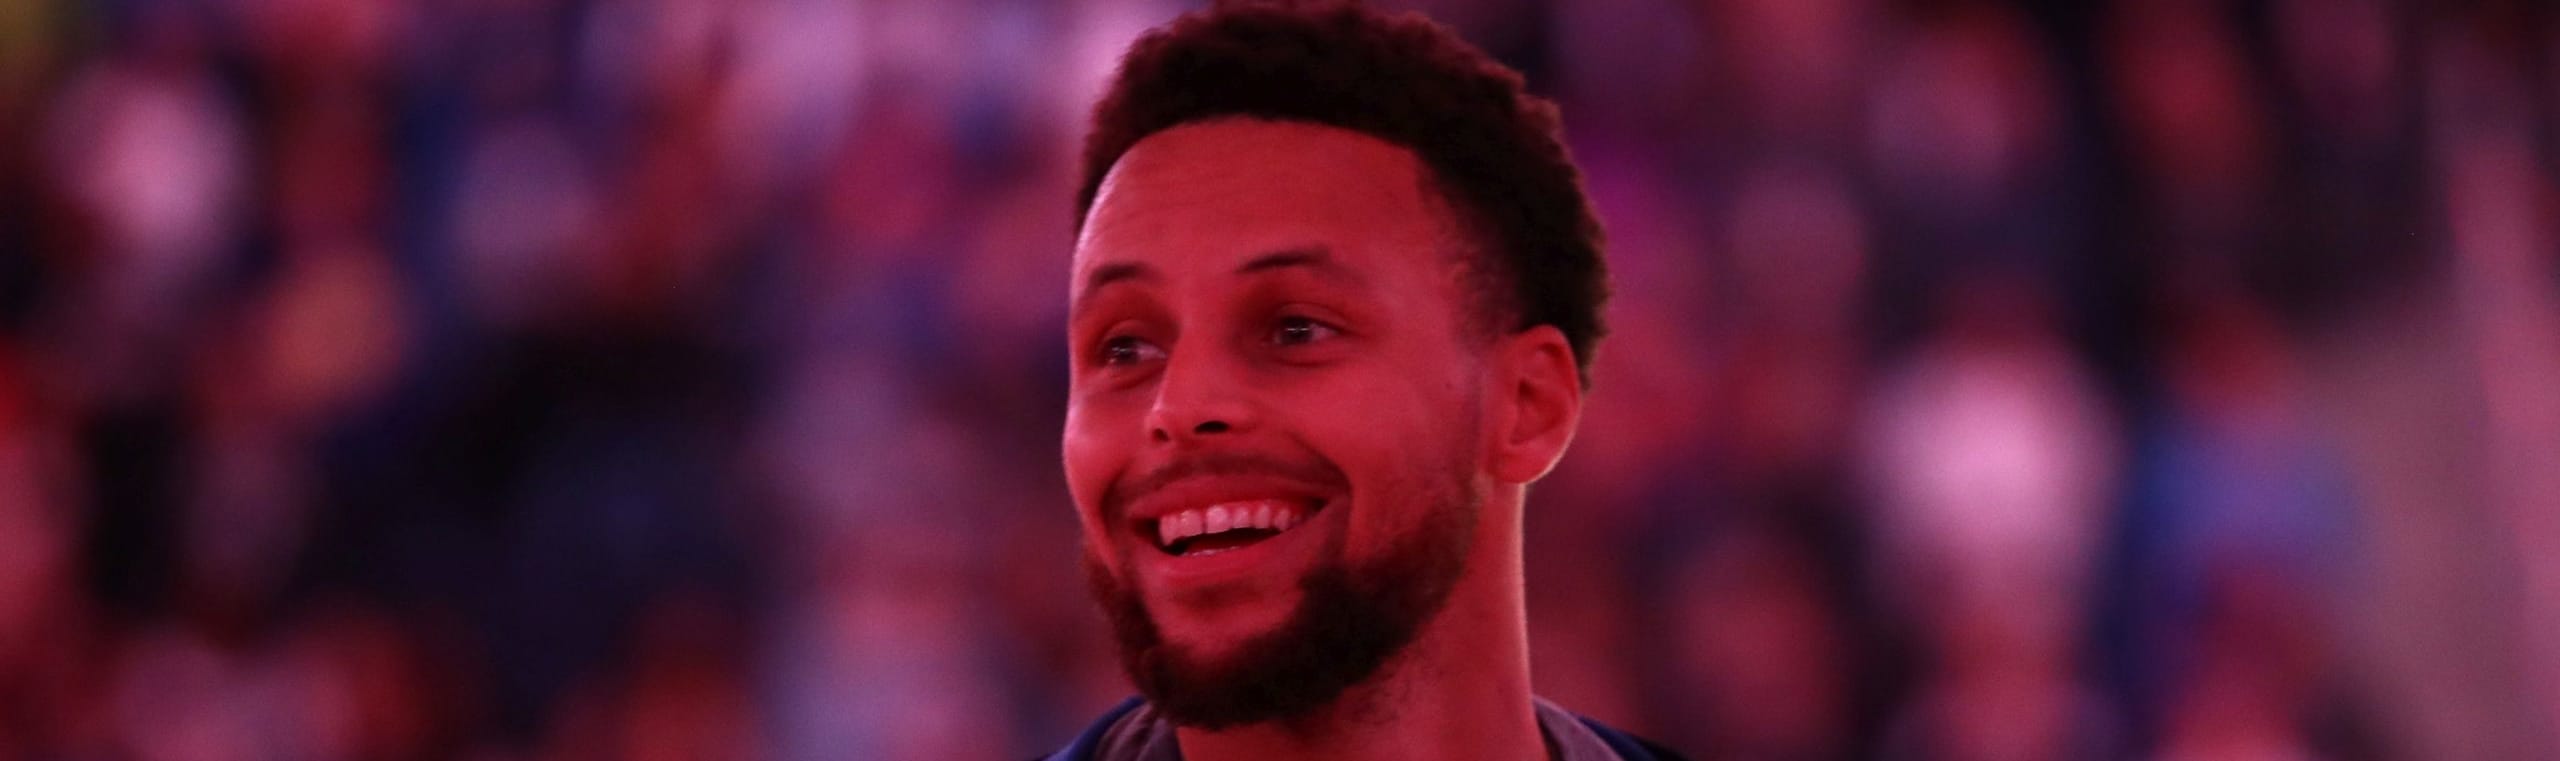 Pronostici NBA oggi: Curry vuol suonarle ai Jazz, aria di garbage per Mavs e 76ers